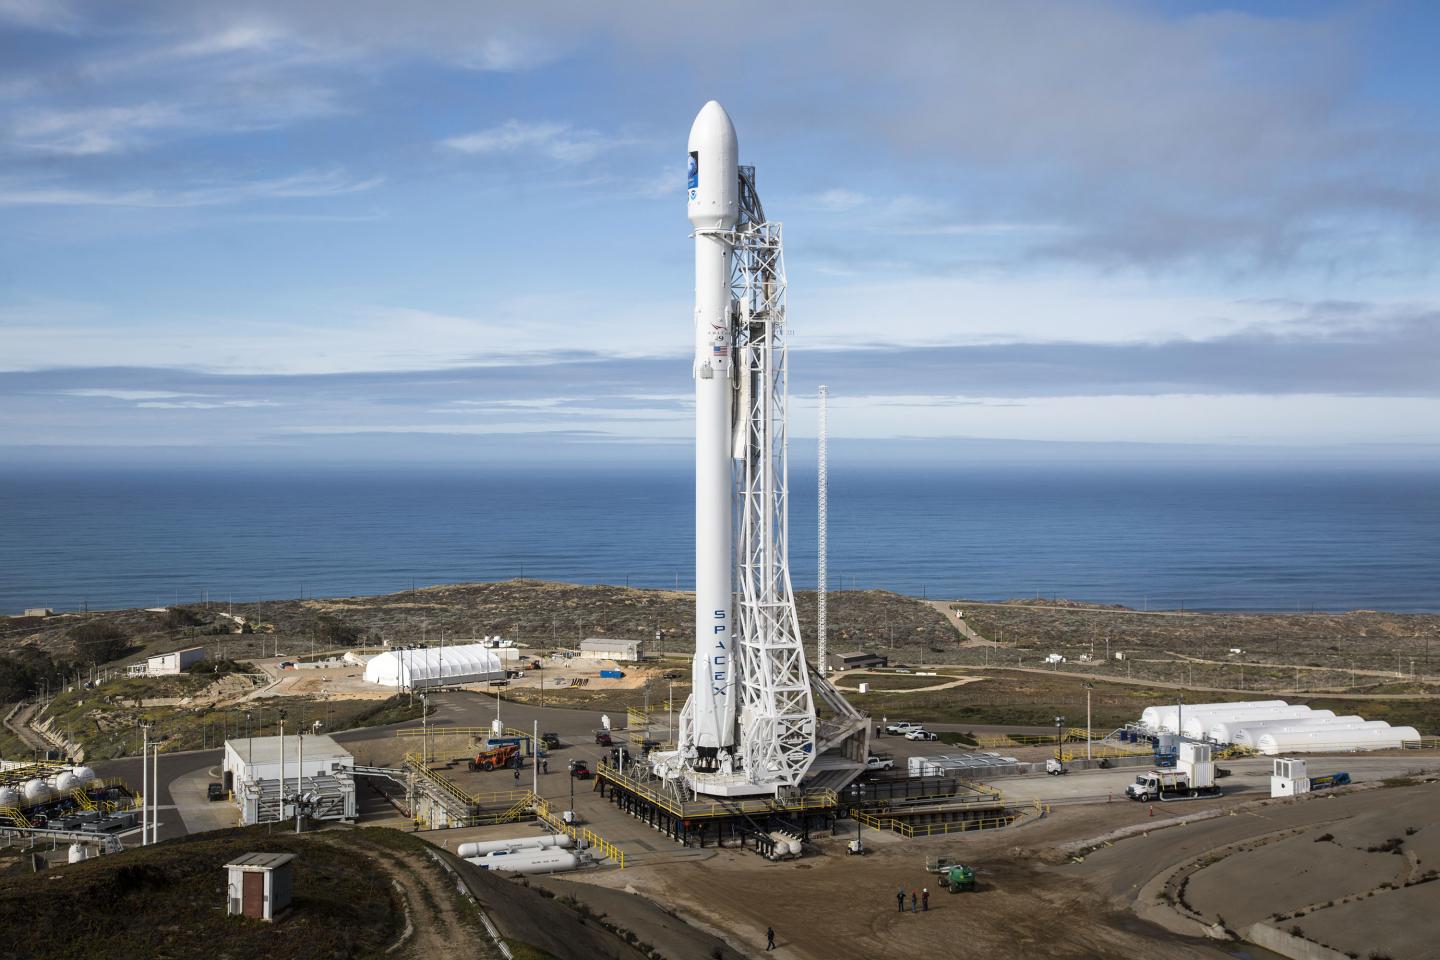  Falcon 9 rocket standing vertical at Vandenberg Space Force Base 